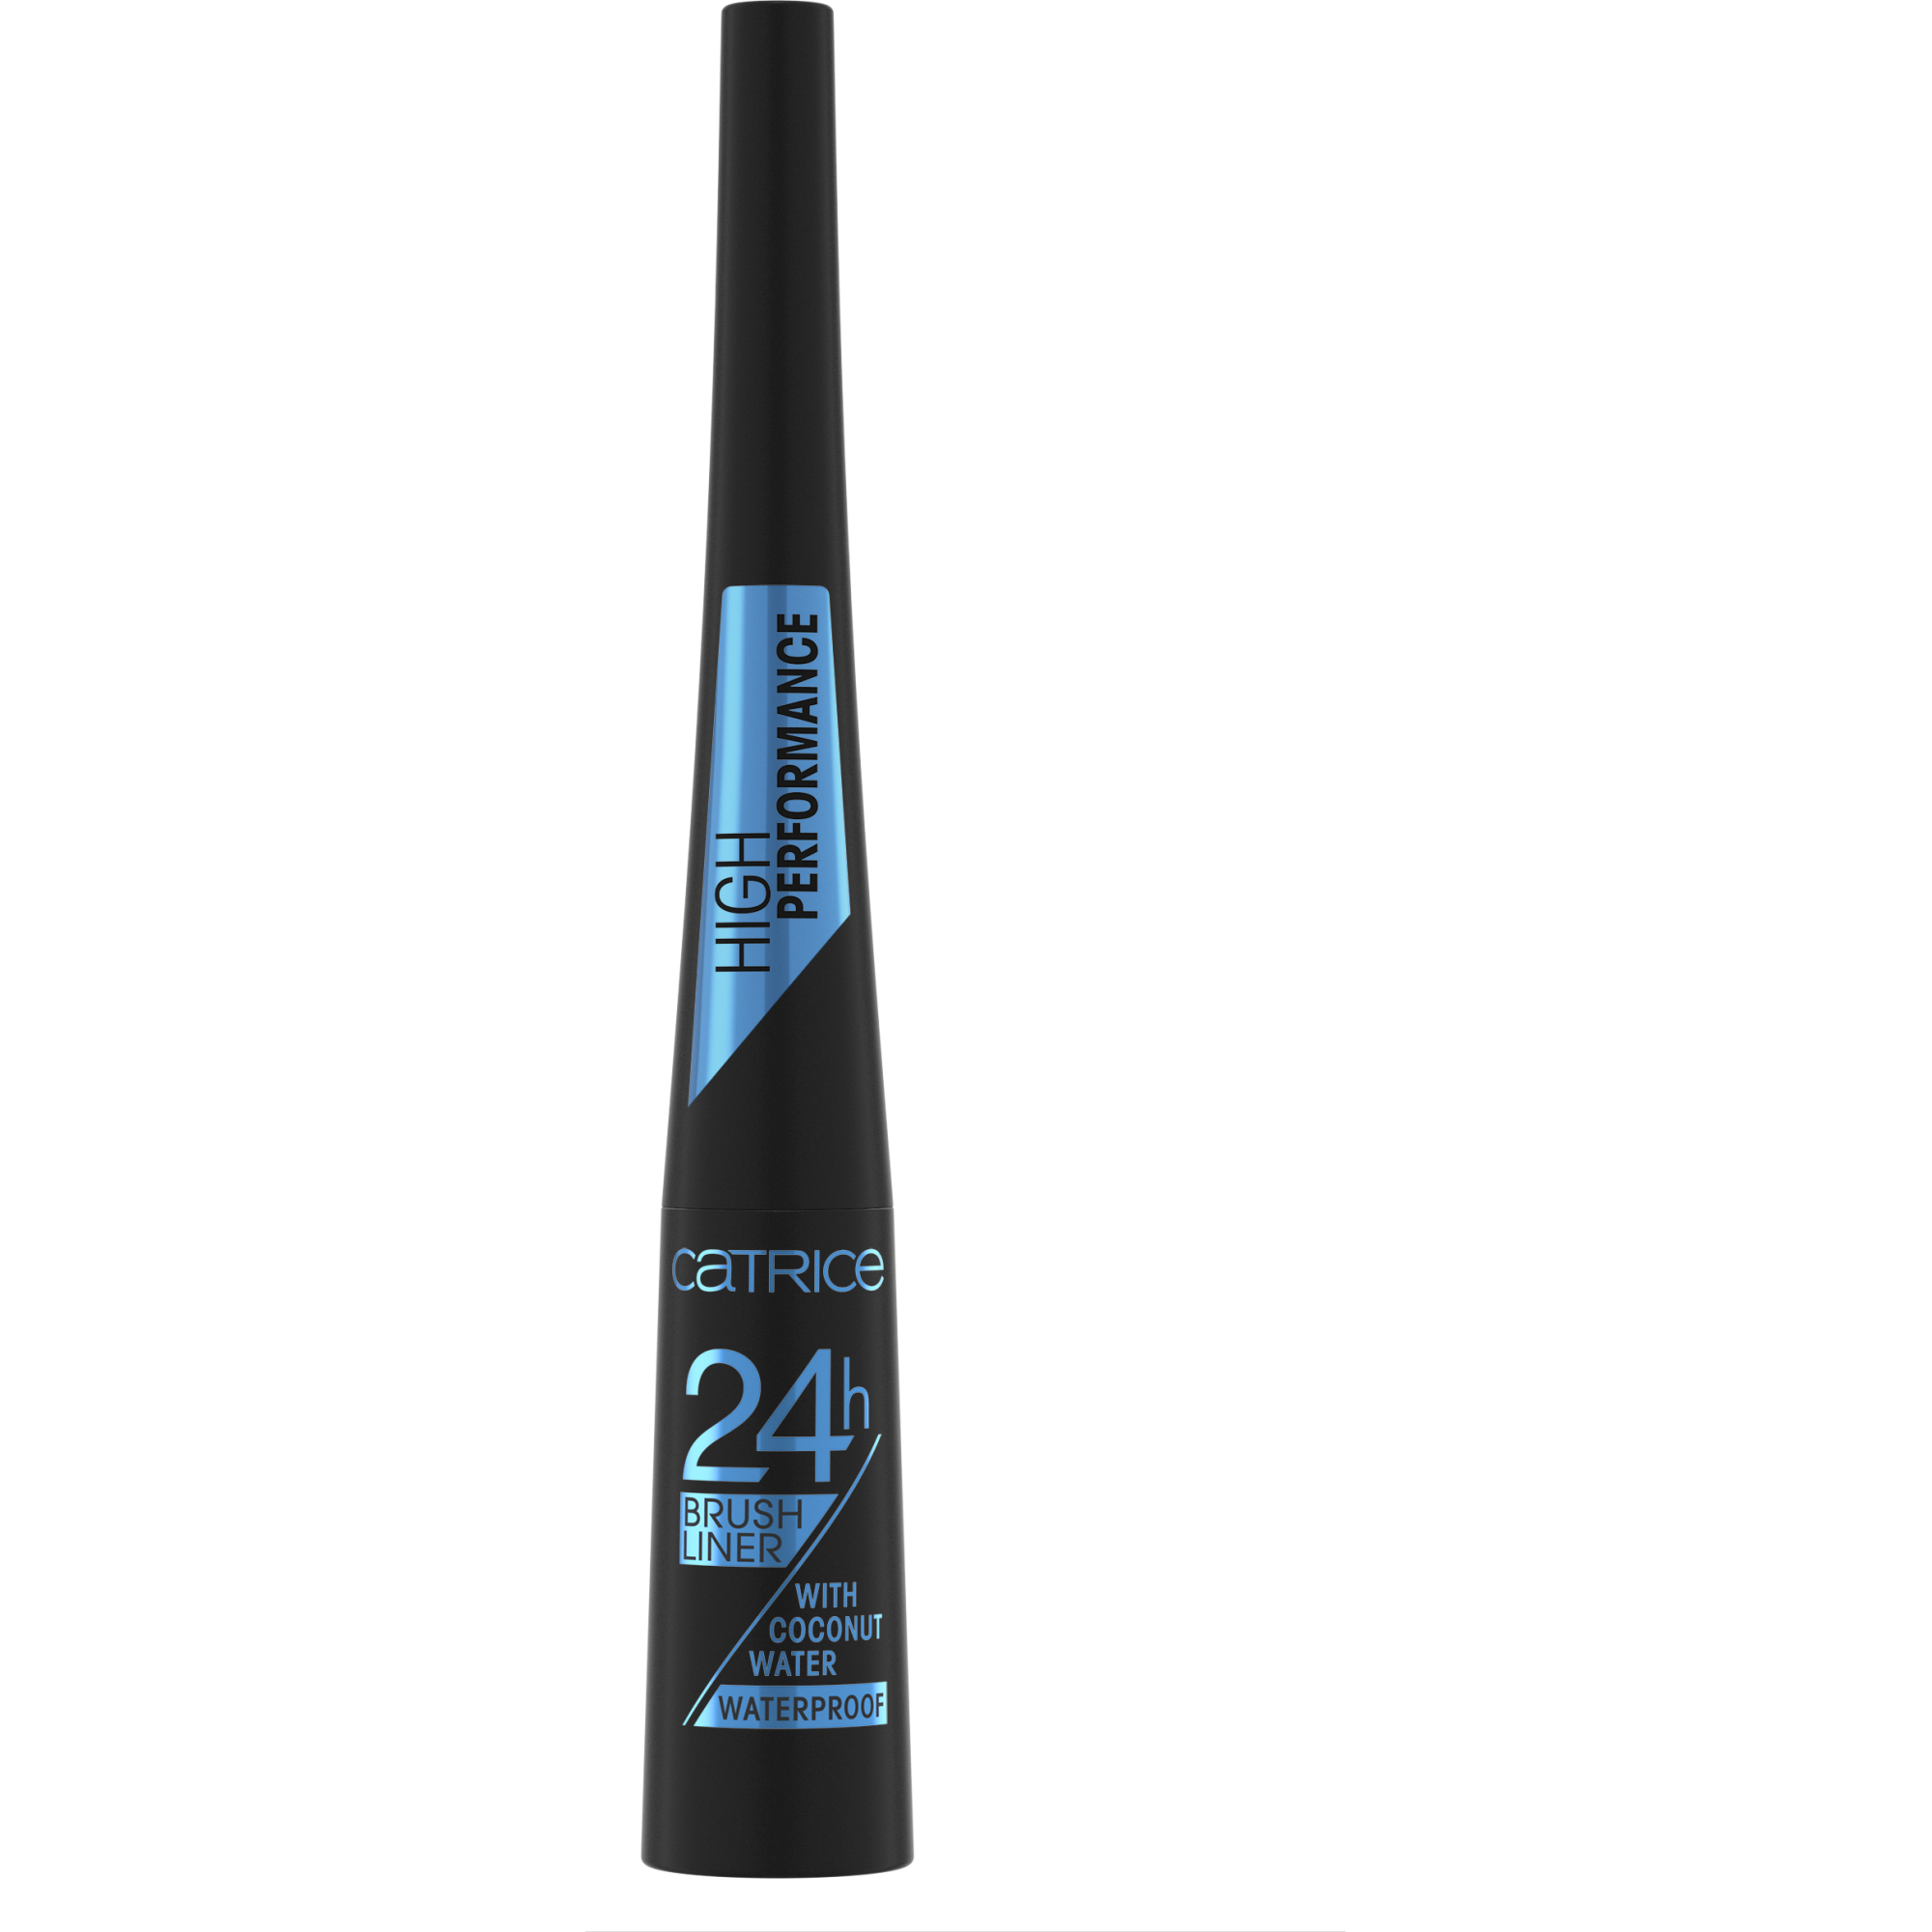 24h Brush Liner Waterproof